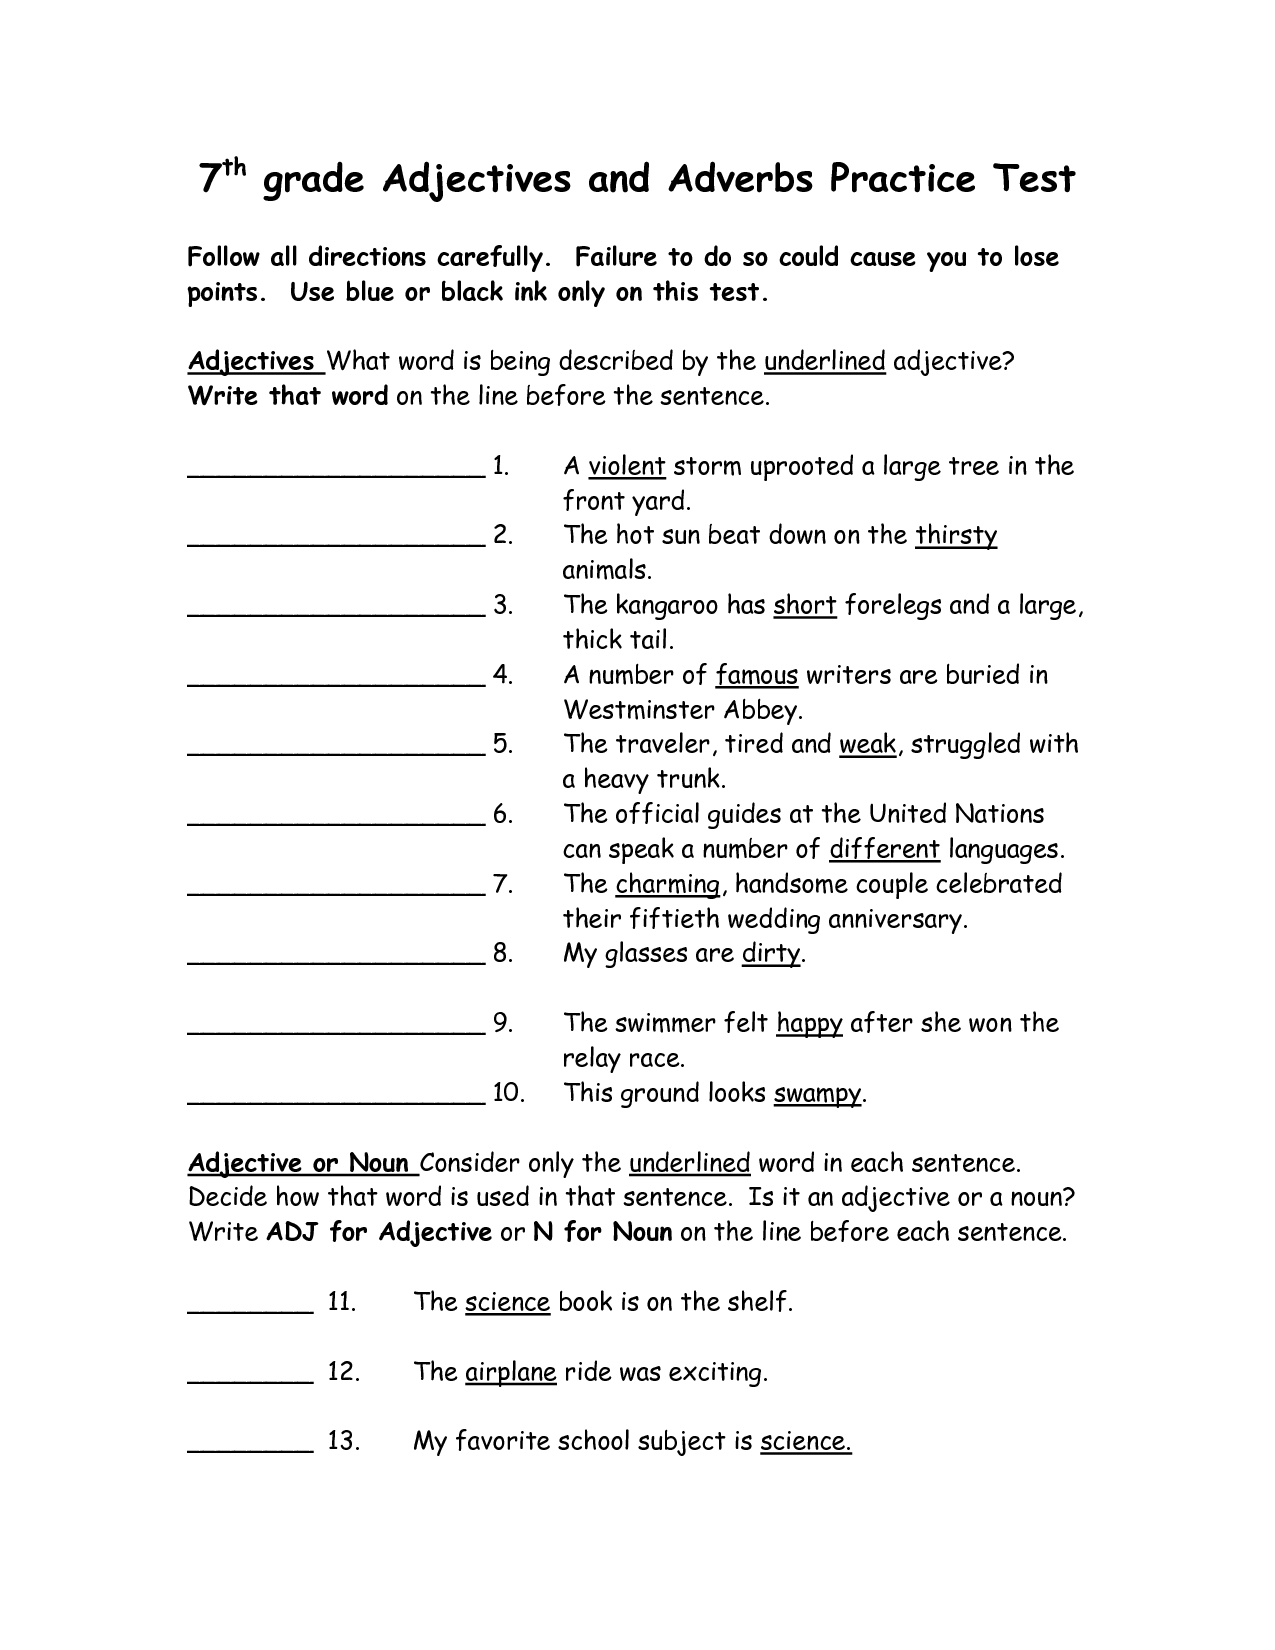 7th Grade Worksheet Category Page 7 - worksheeto.com